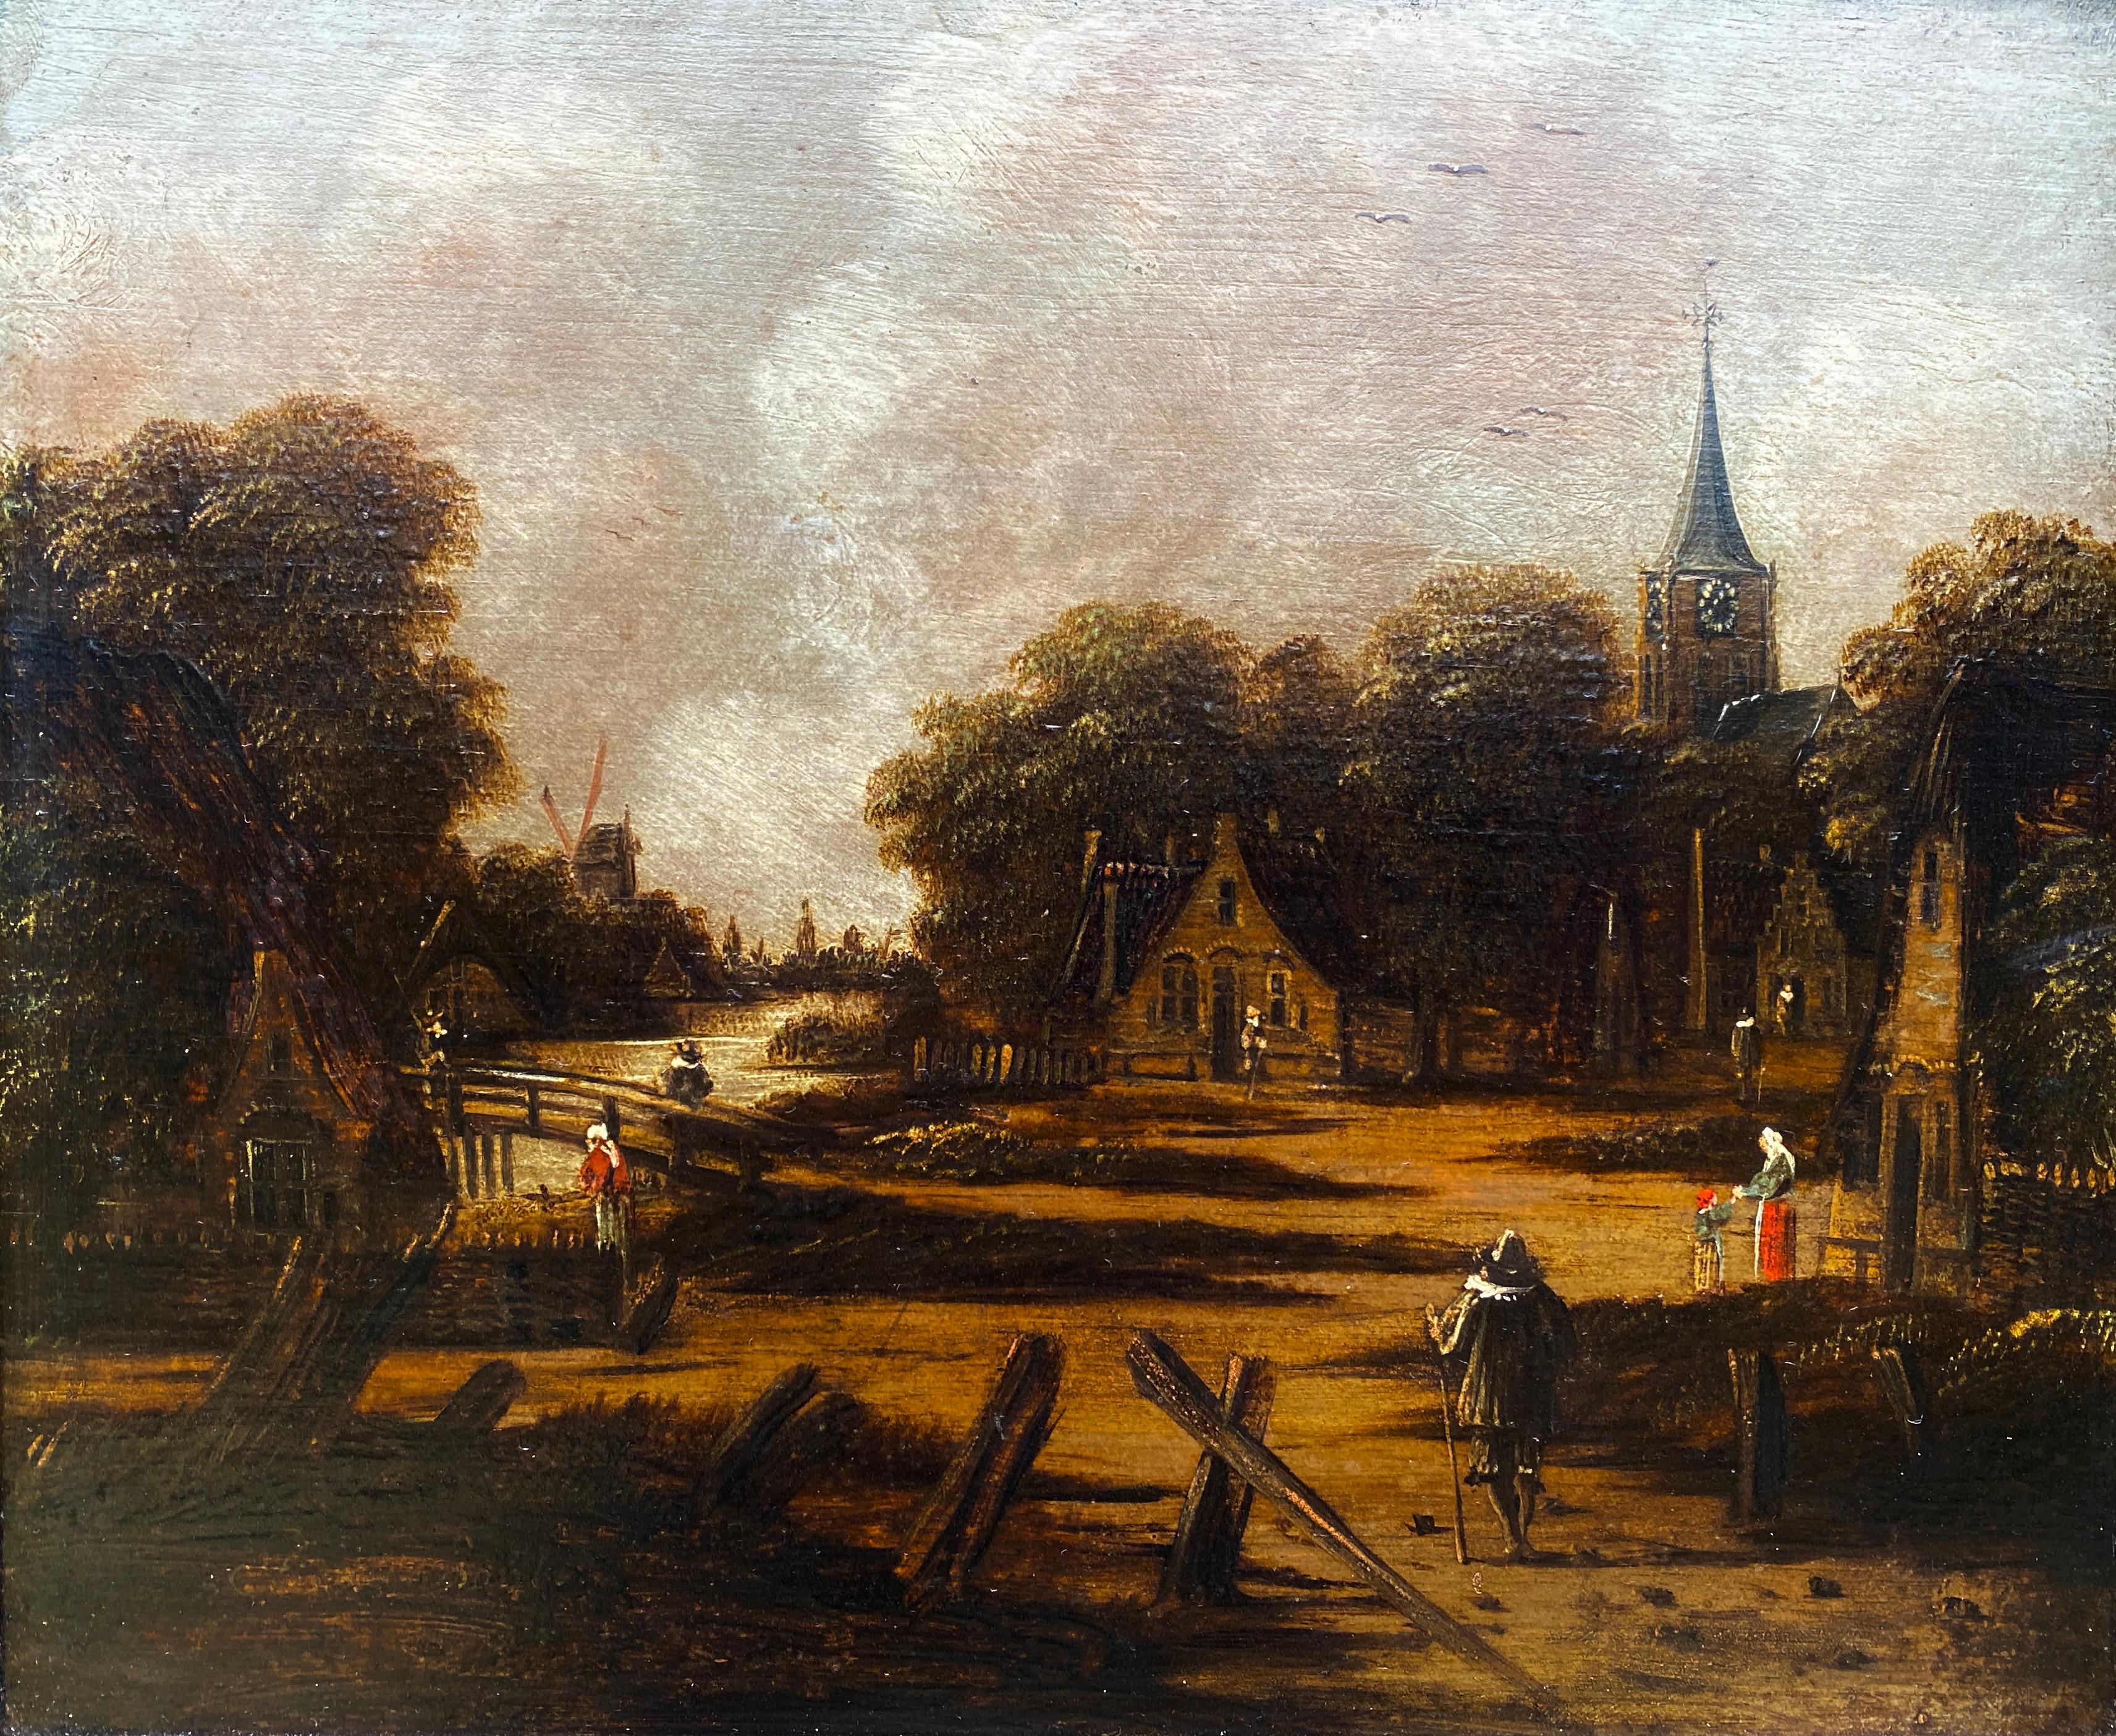 Traveller in a Duch Village, Jan Meerhoud, 1633 – 1677, Dutch School, Golden Age - Painting by Meerhoud Jan